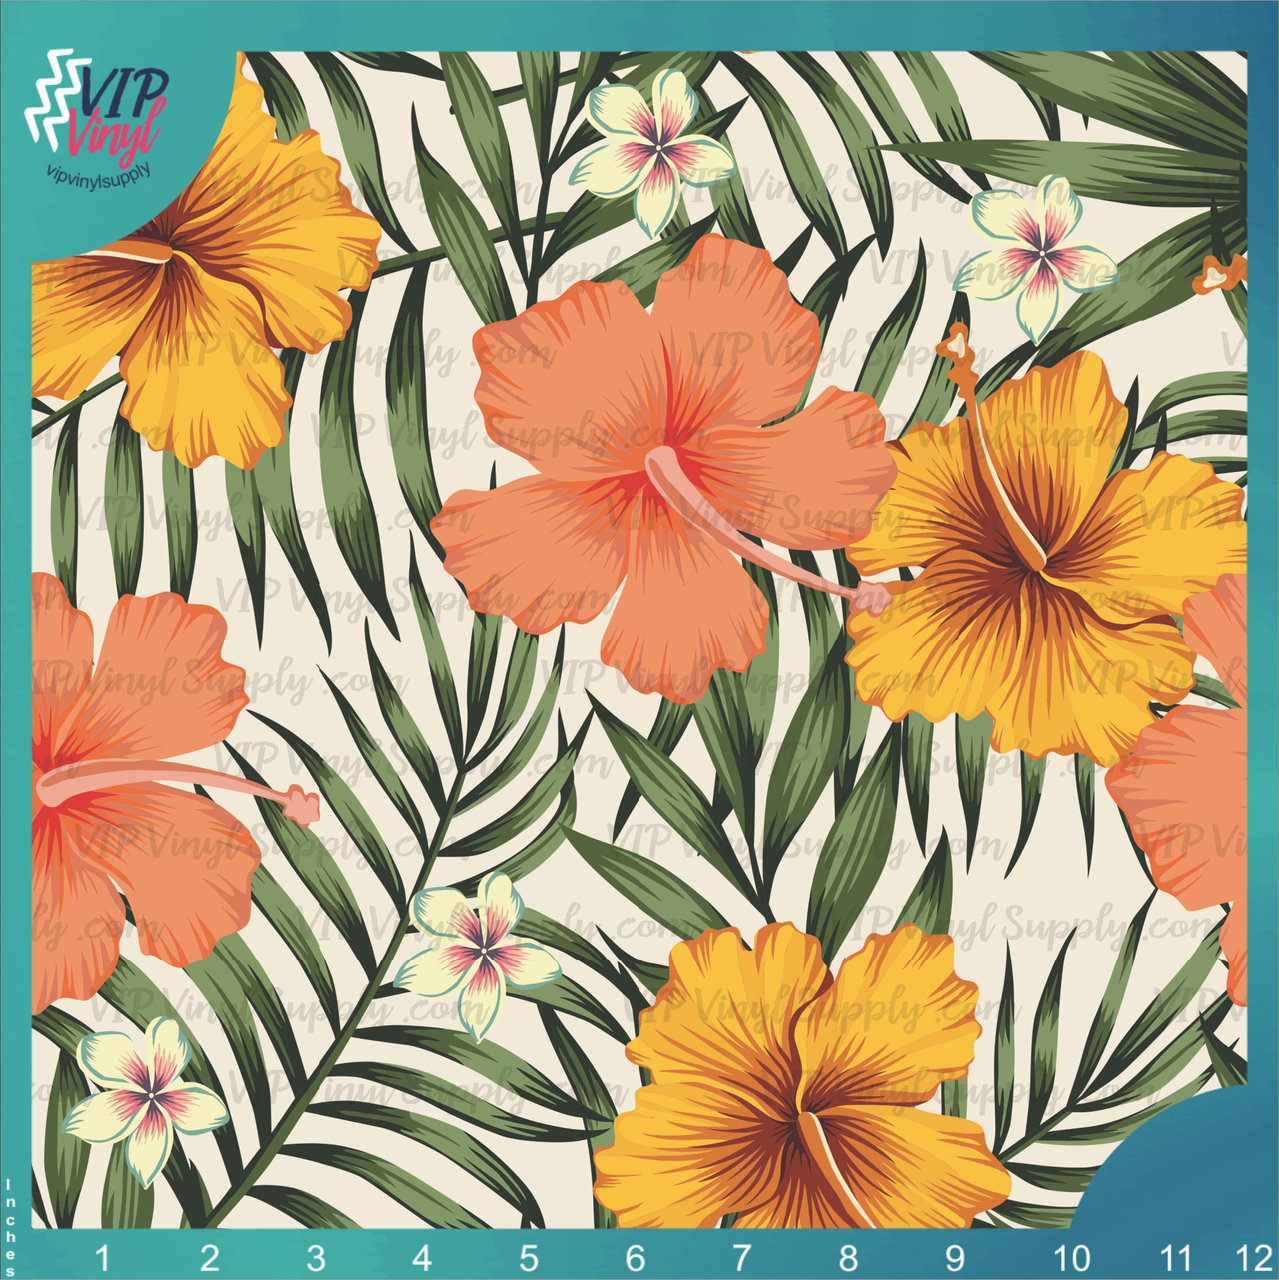 Floral HTV Vinyl Tropical Flower Pattern on Teal Vinyl 